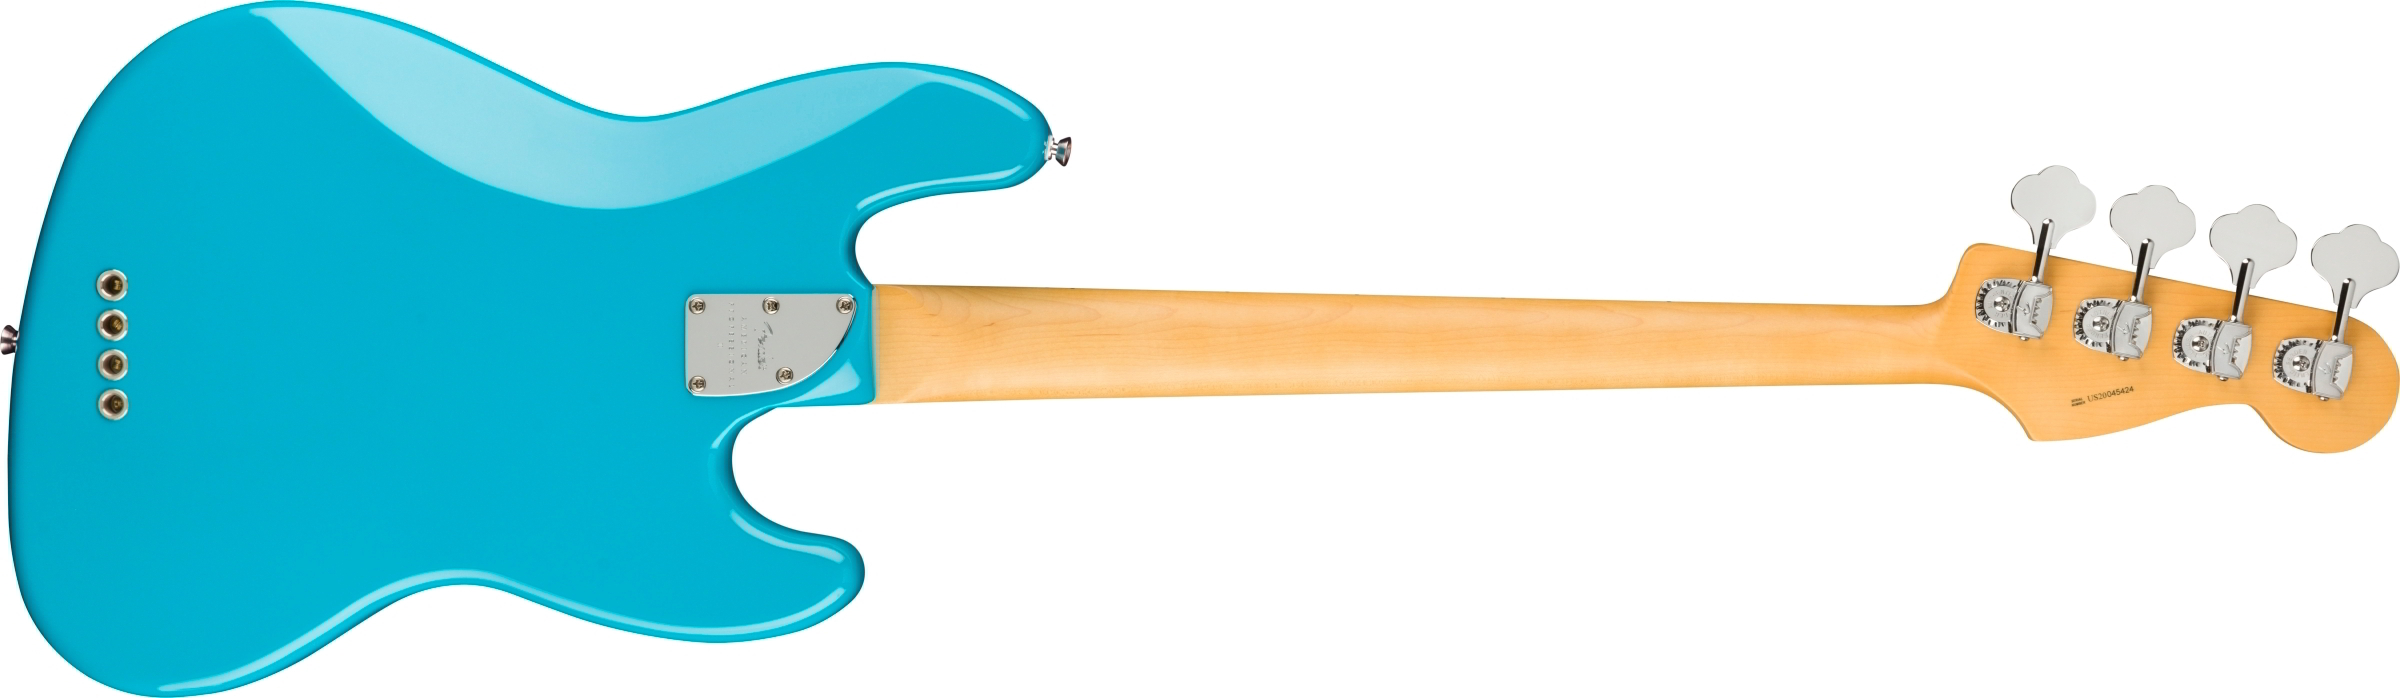 American Professional II Jazz Bass Left-Hand, Maple Fingerboard, Miami Blue背面画像